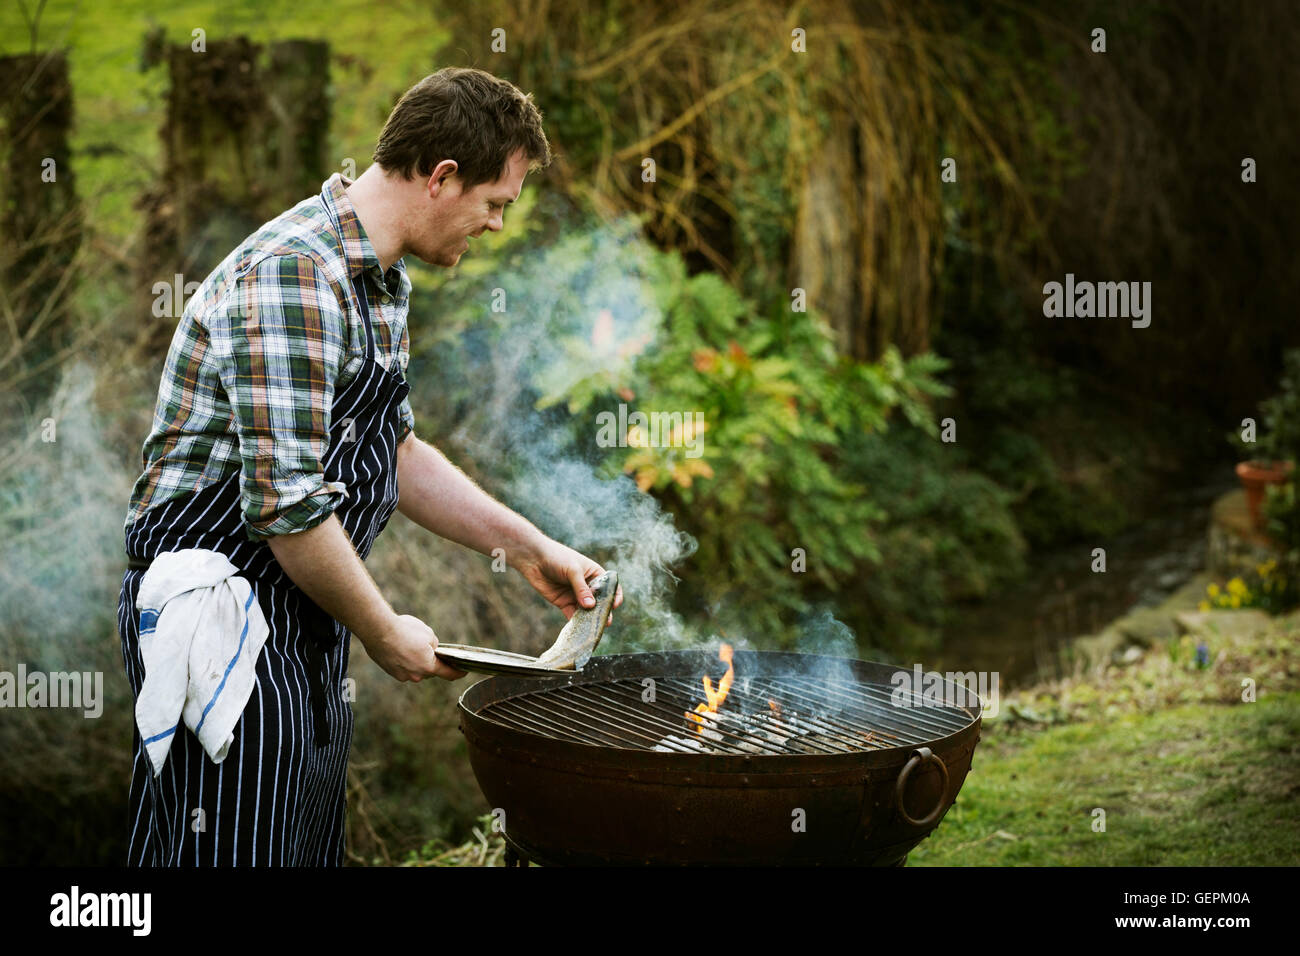 Chef standing in a garden, griller le poisson sur un barbecue. Banque D'Images